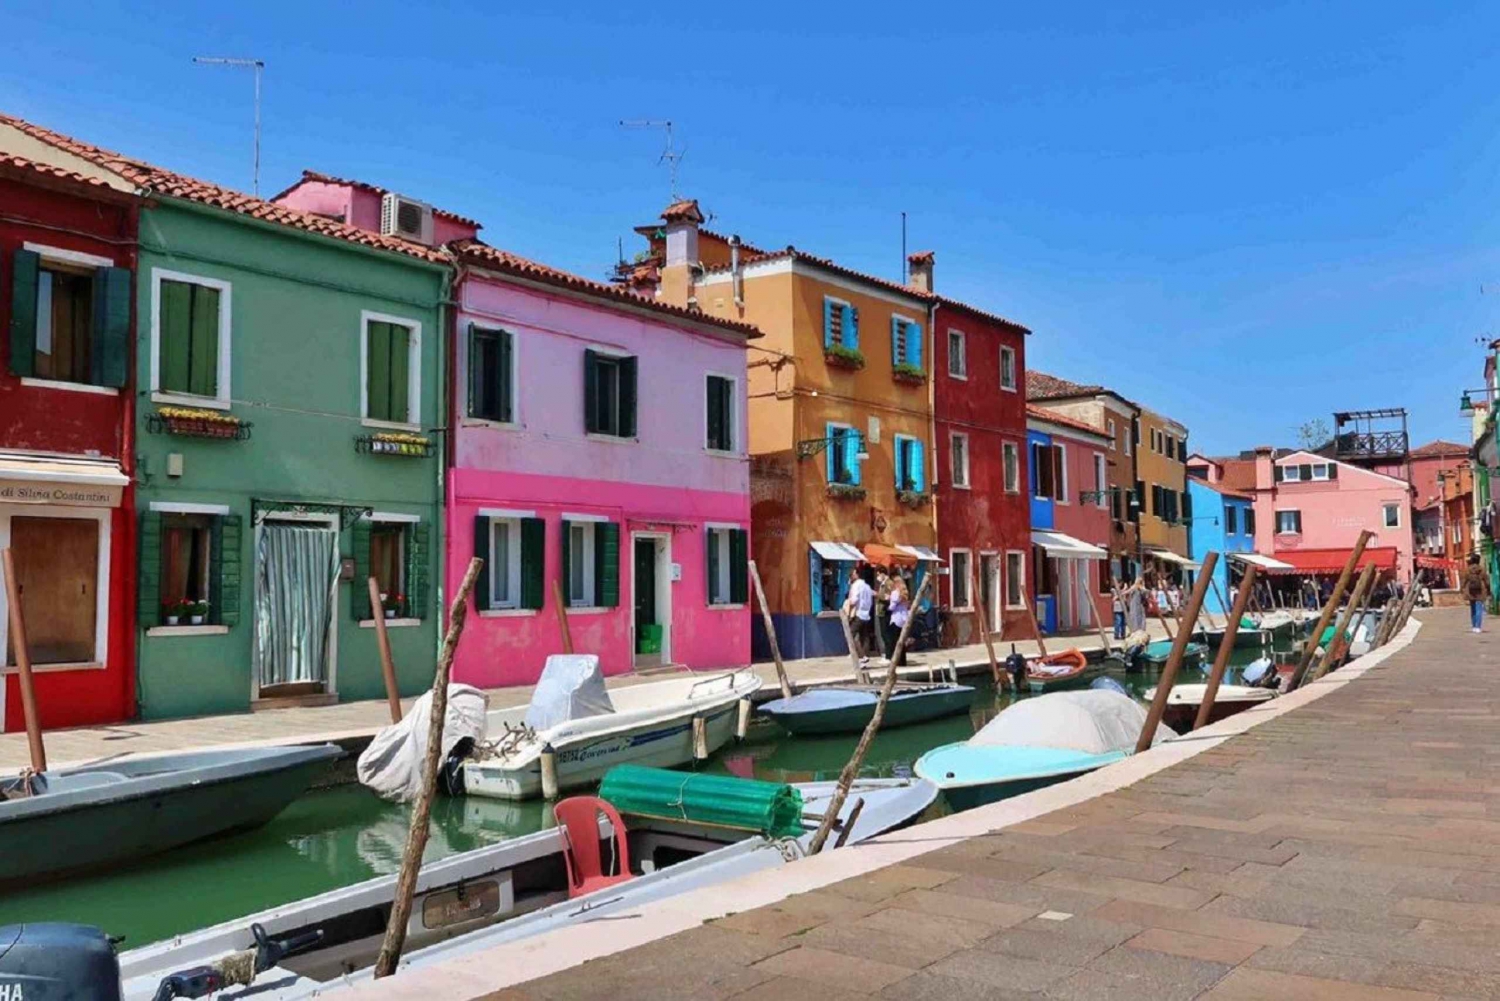 Venice city + islands Murano Burano Torcello walking tour